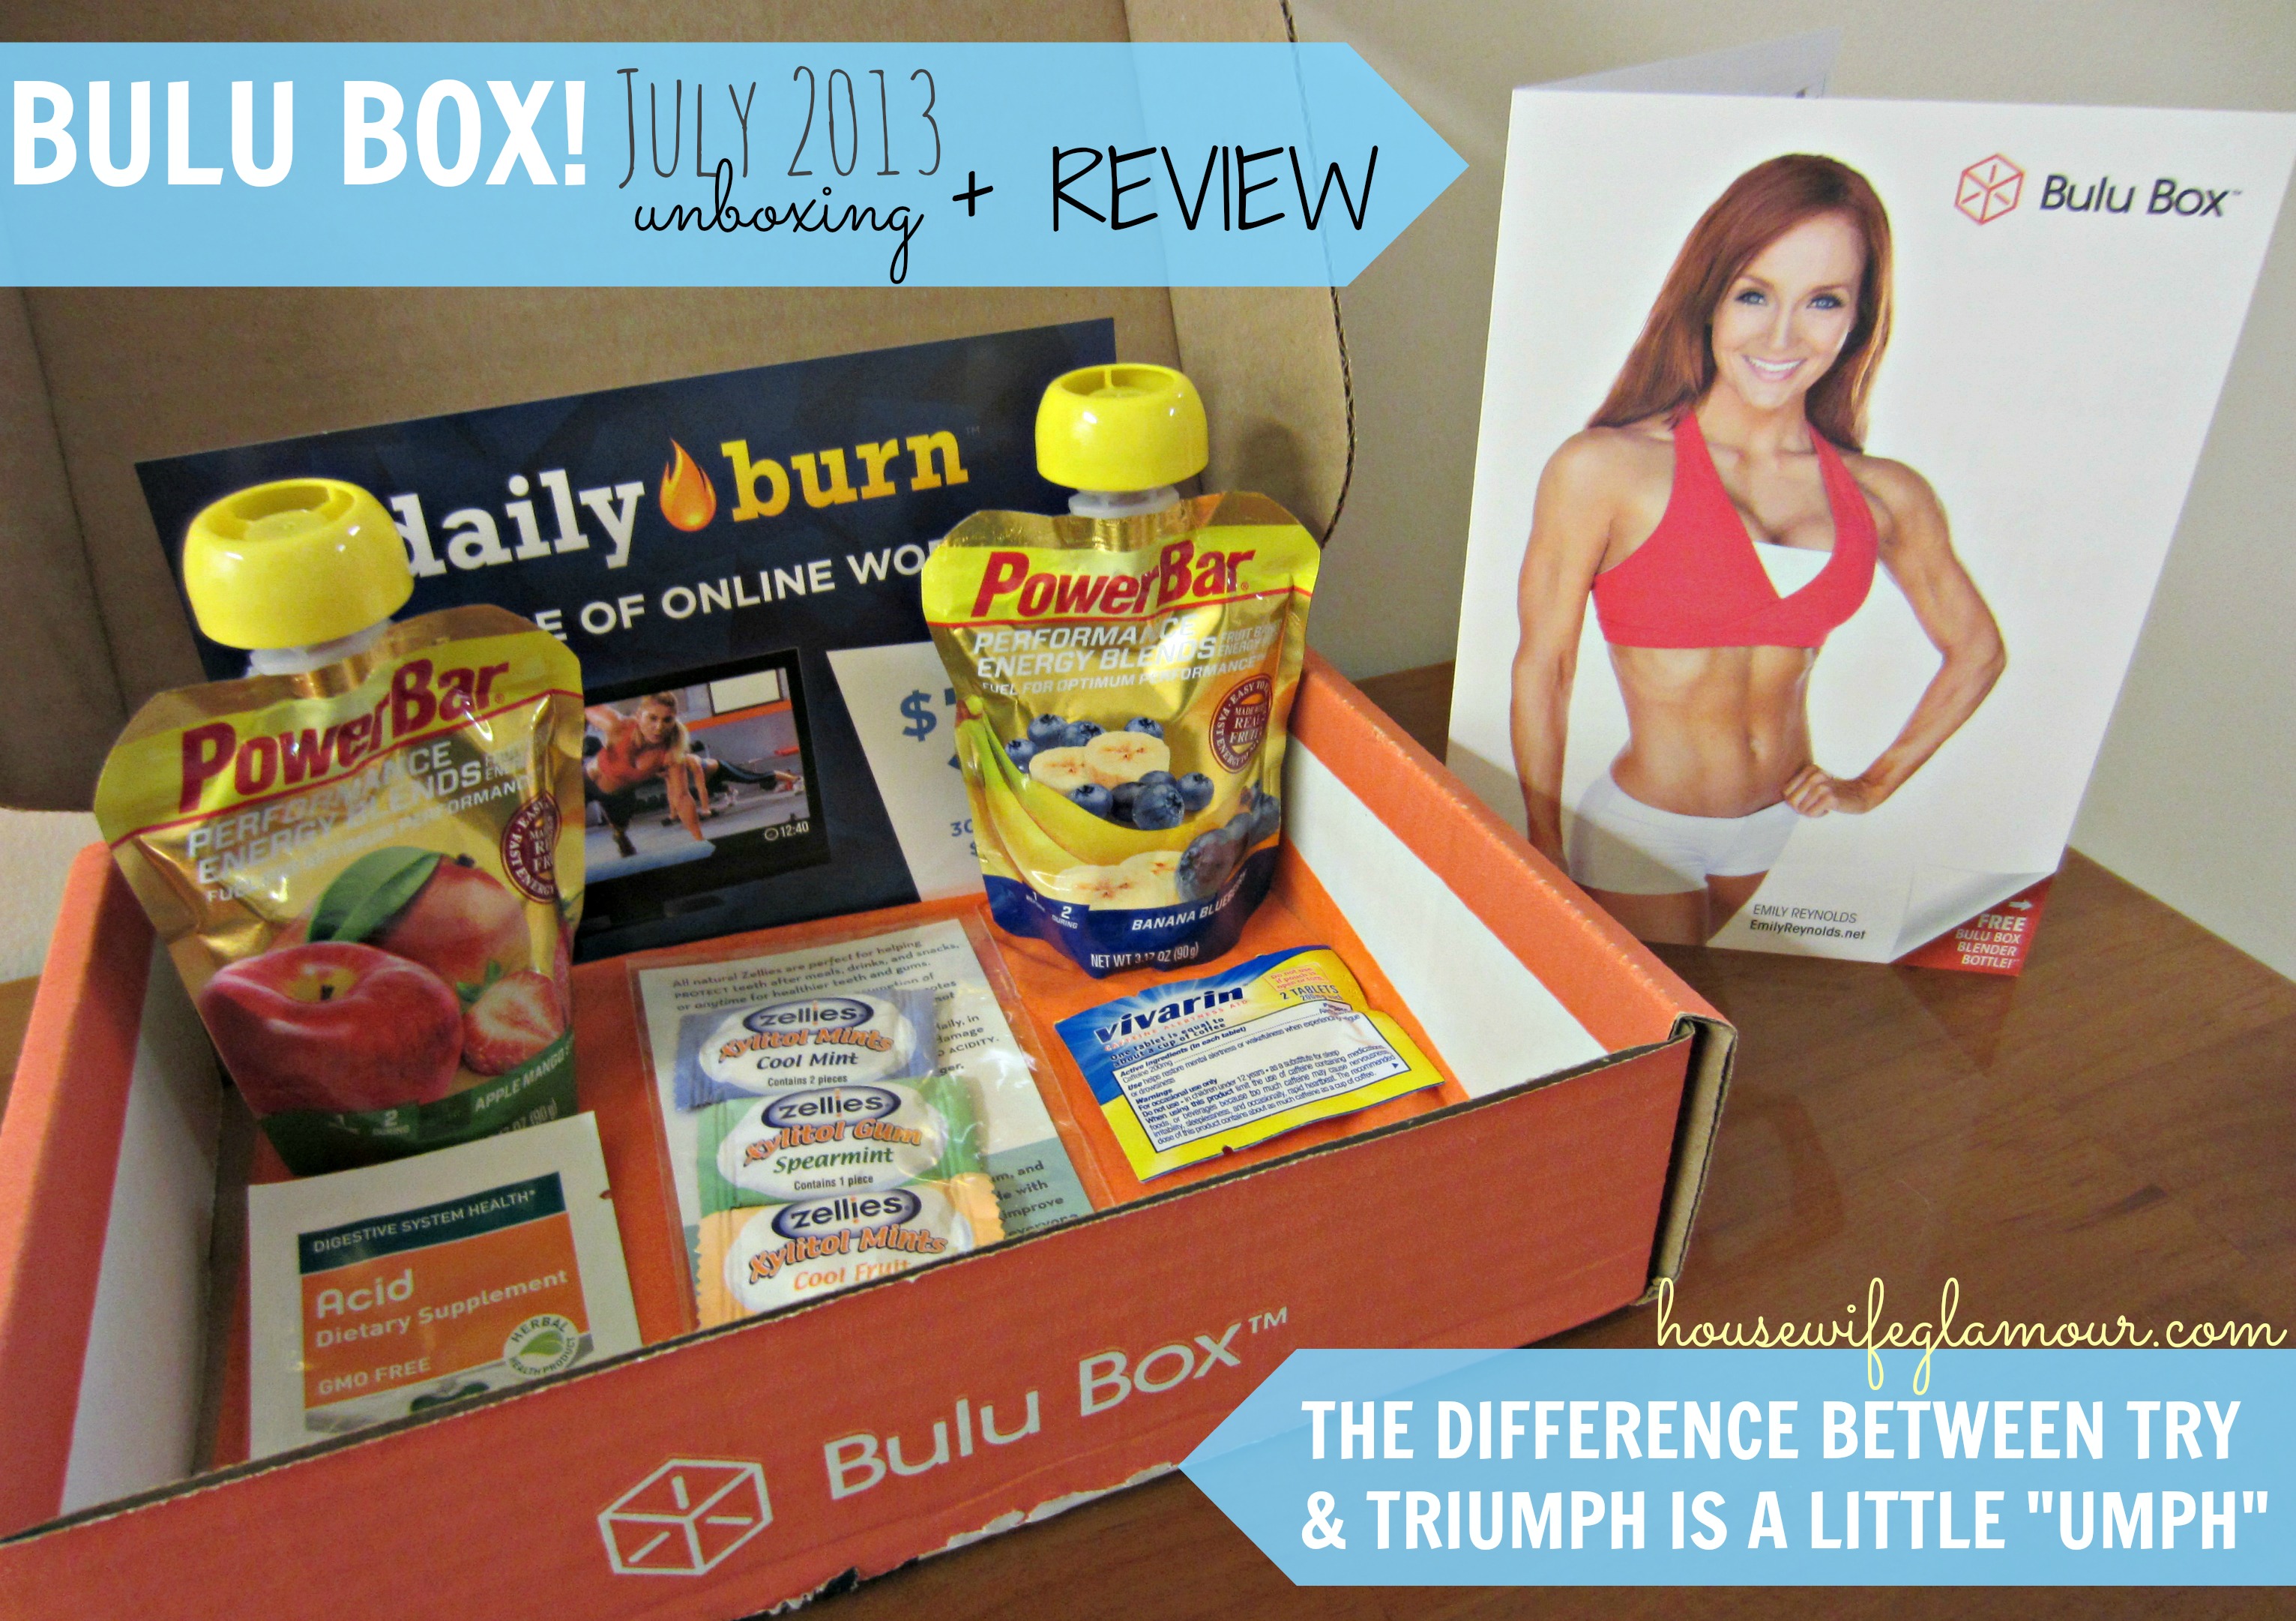 Bulu Box July 2013 Cover